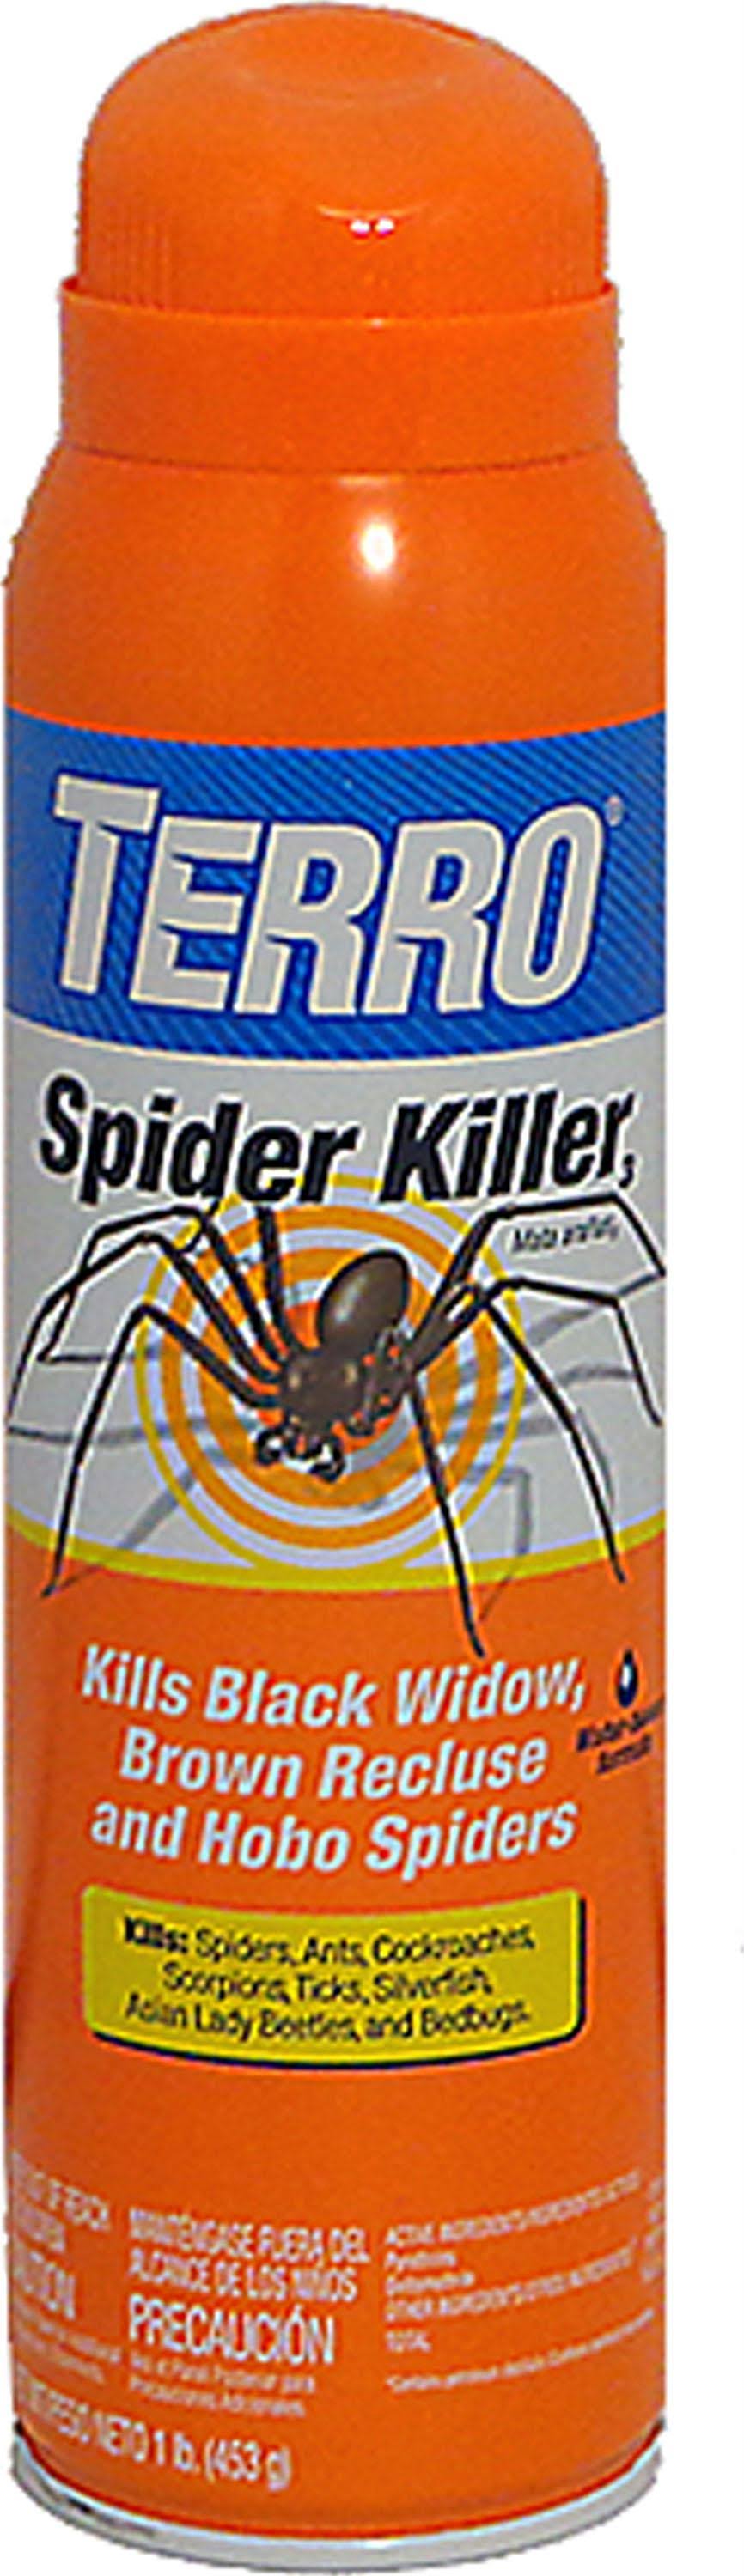 Terro Spider Killer Spray - 16oz